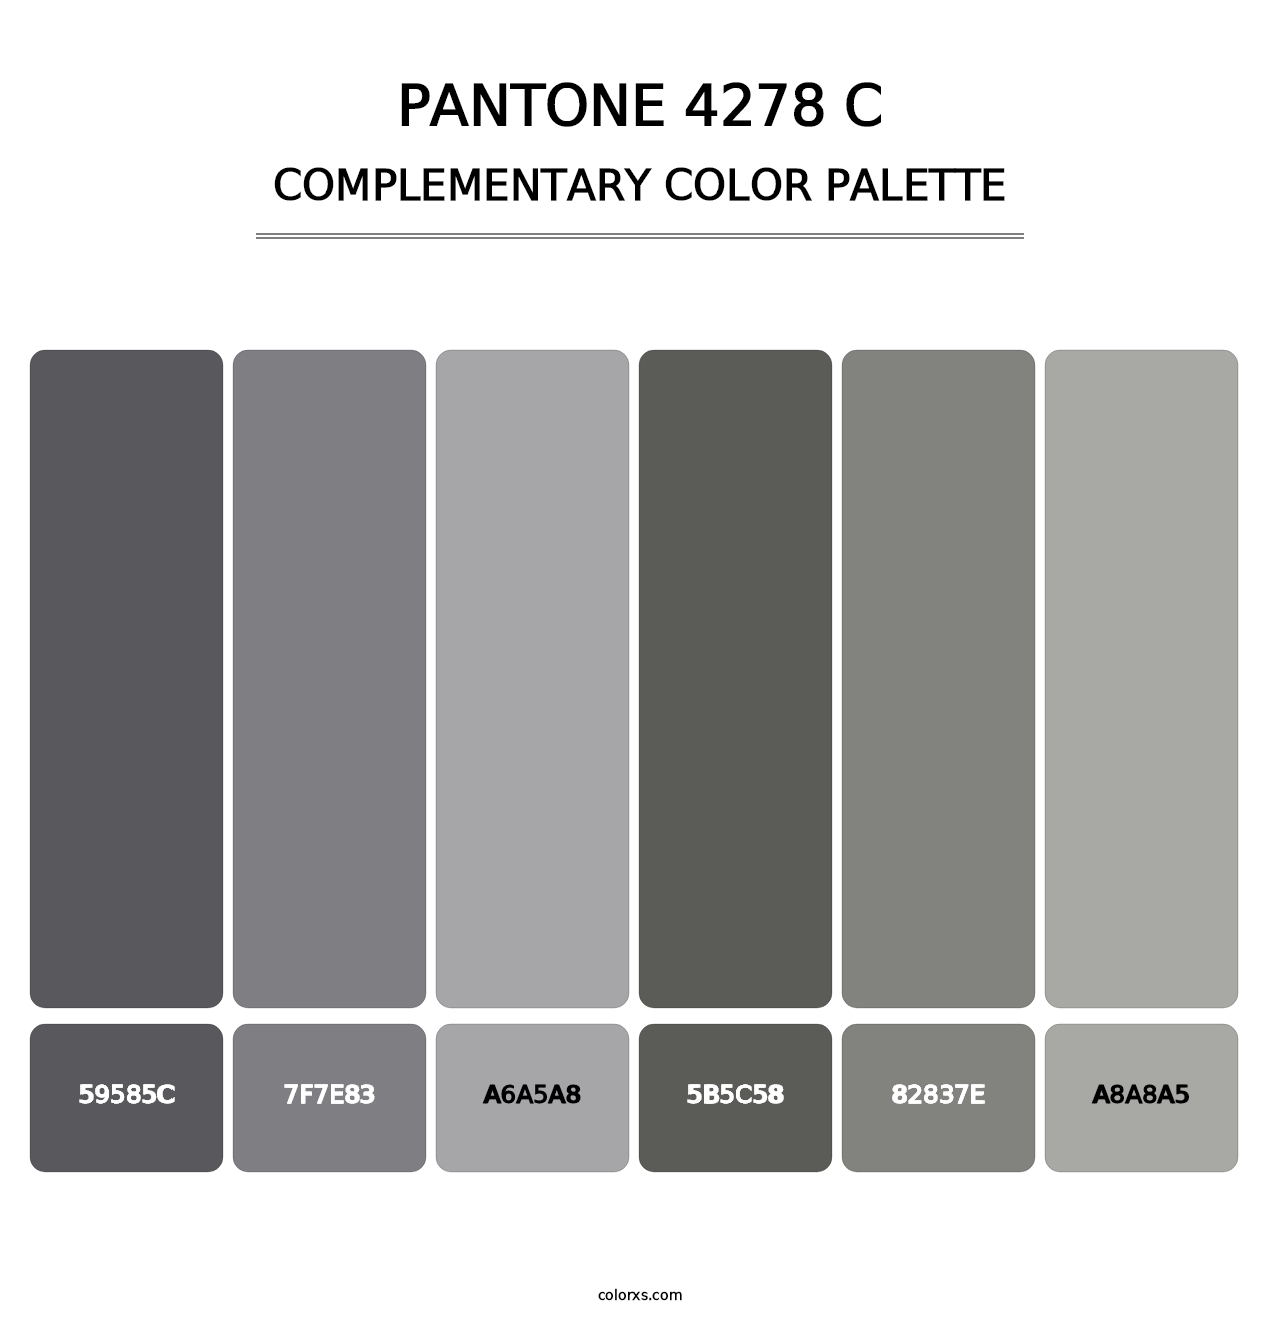 PANTONE 4278 C - Complementary Color Palette